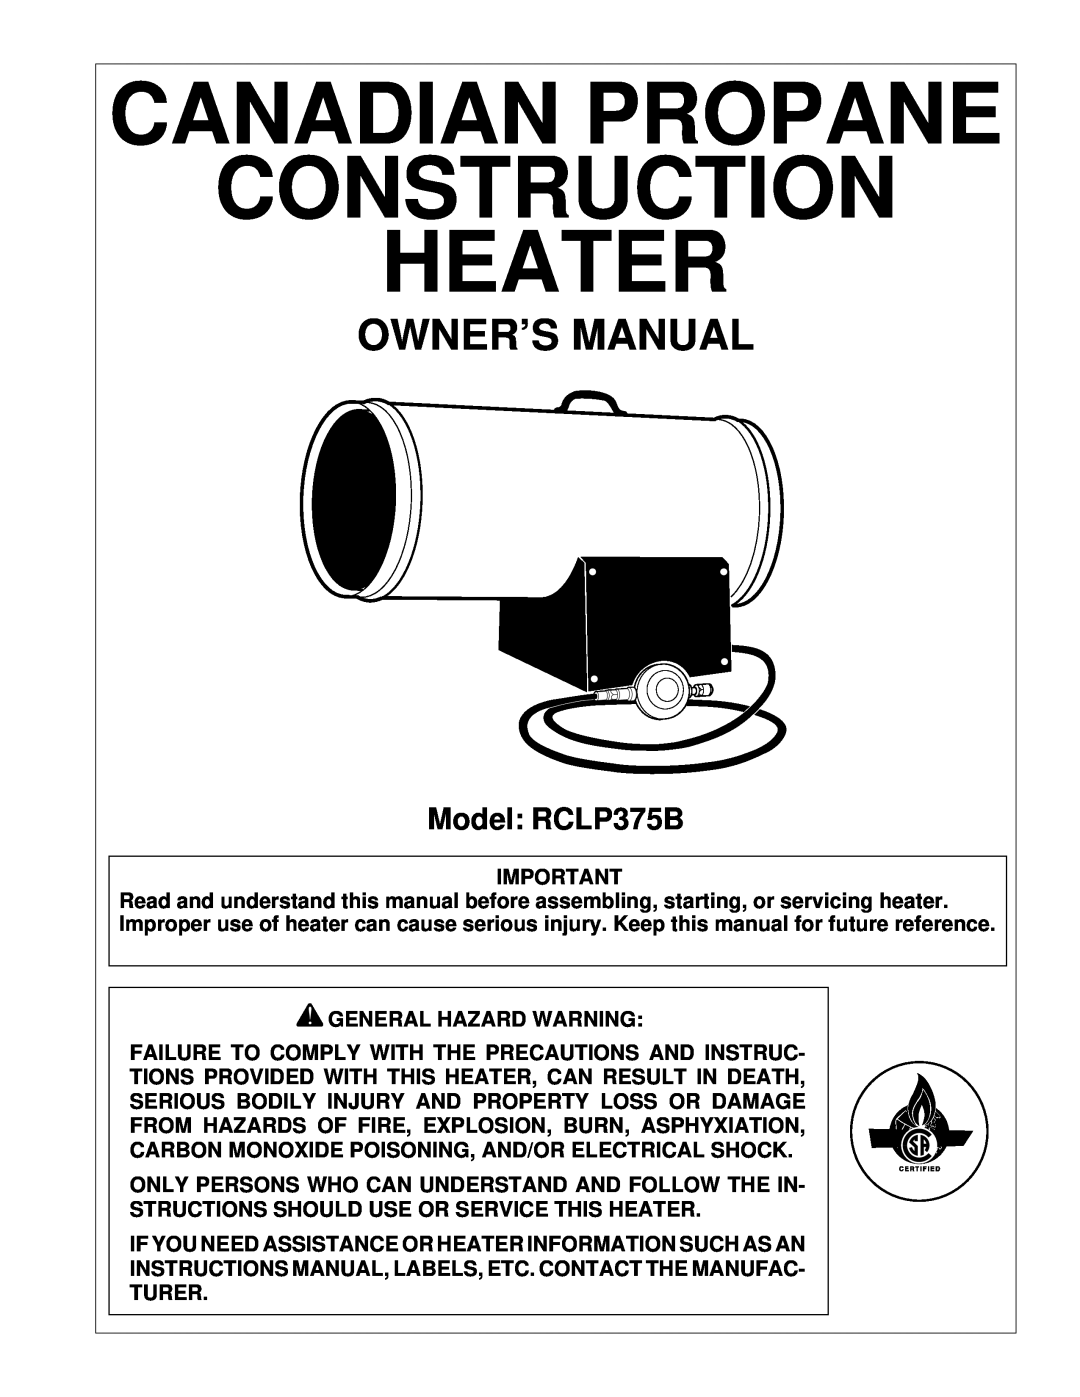 Desa owner manual Model RCLP375B, Canadian Propane Construction Heater 